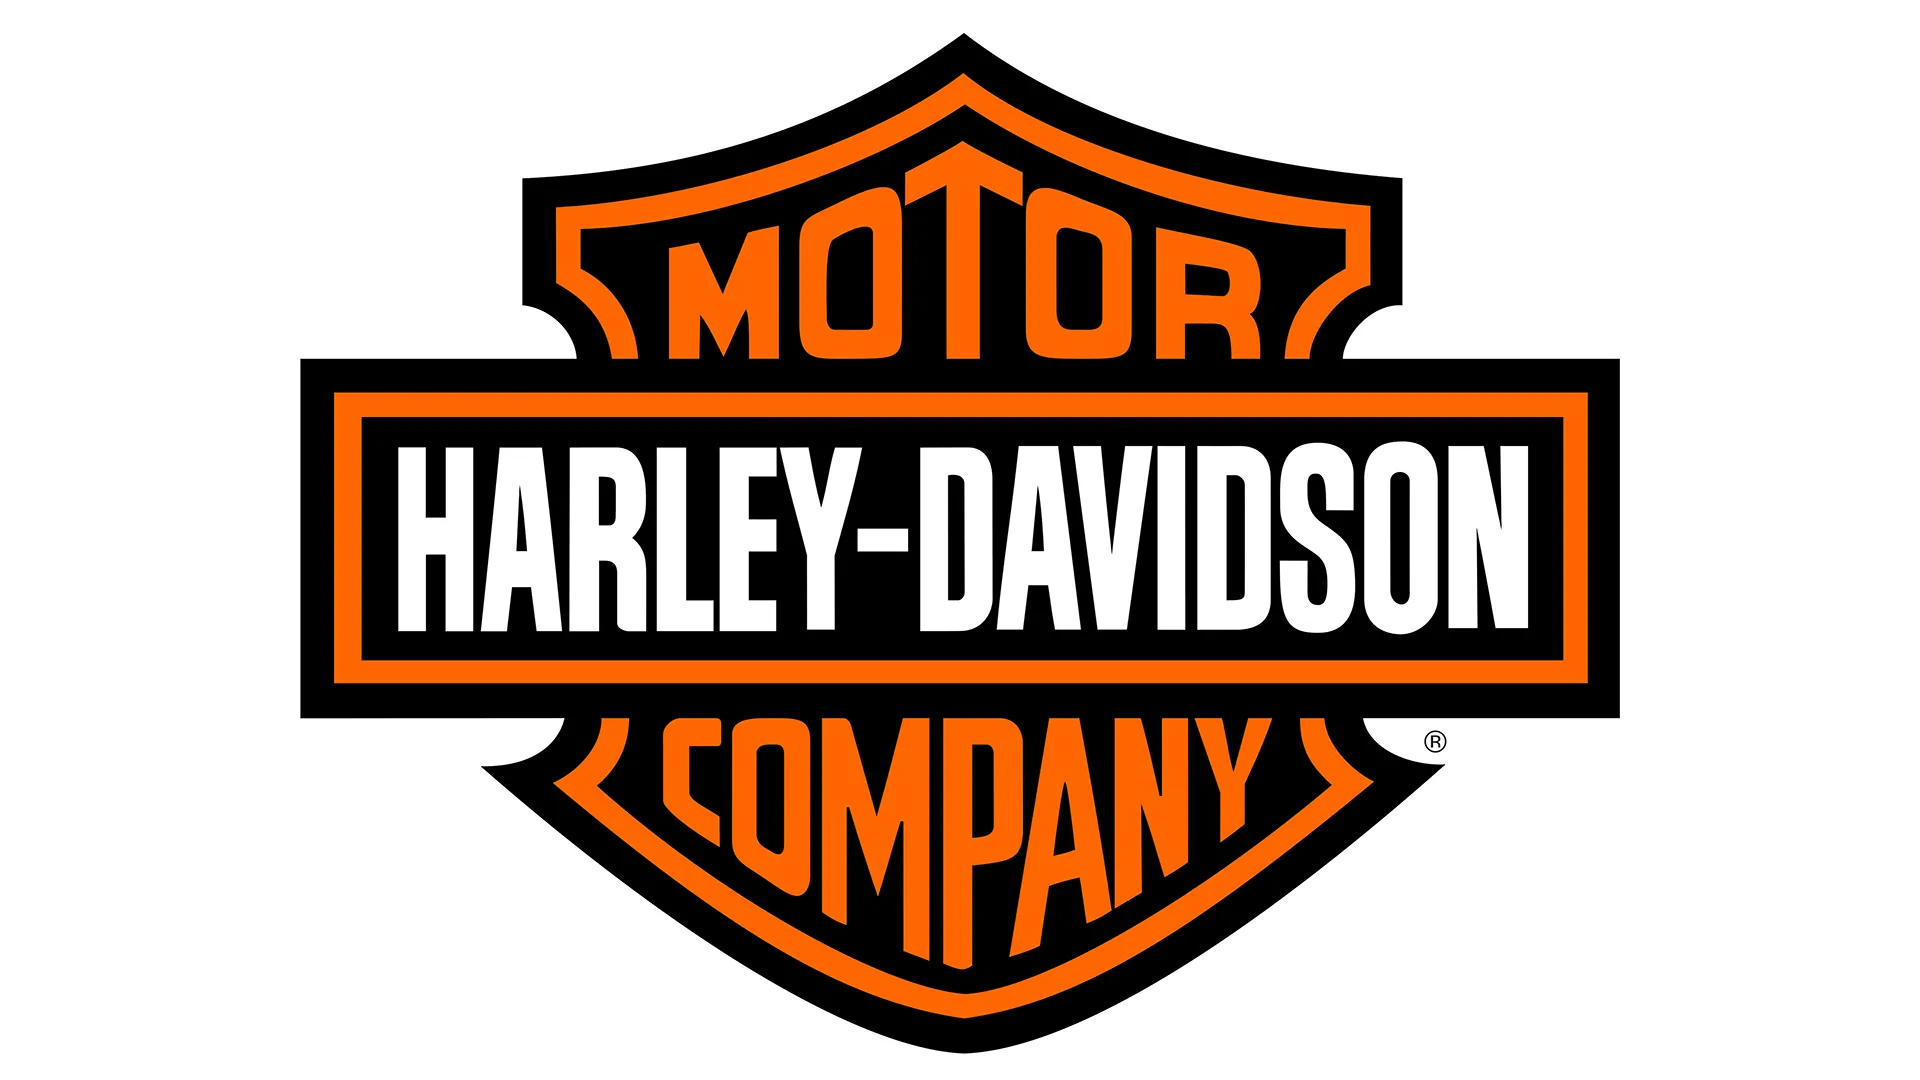 Harley - logo - reduced